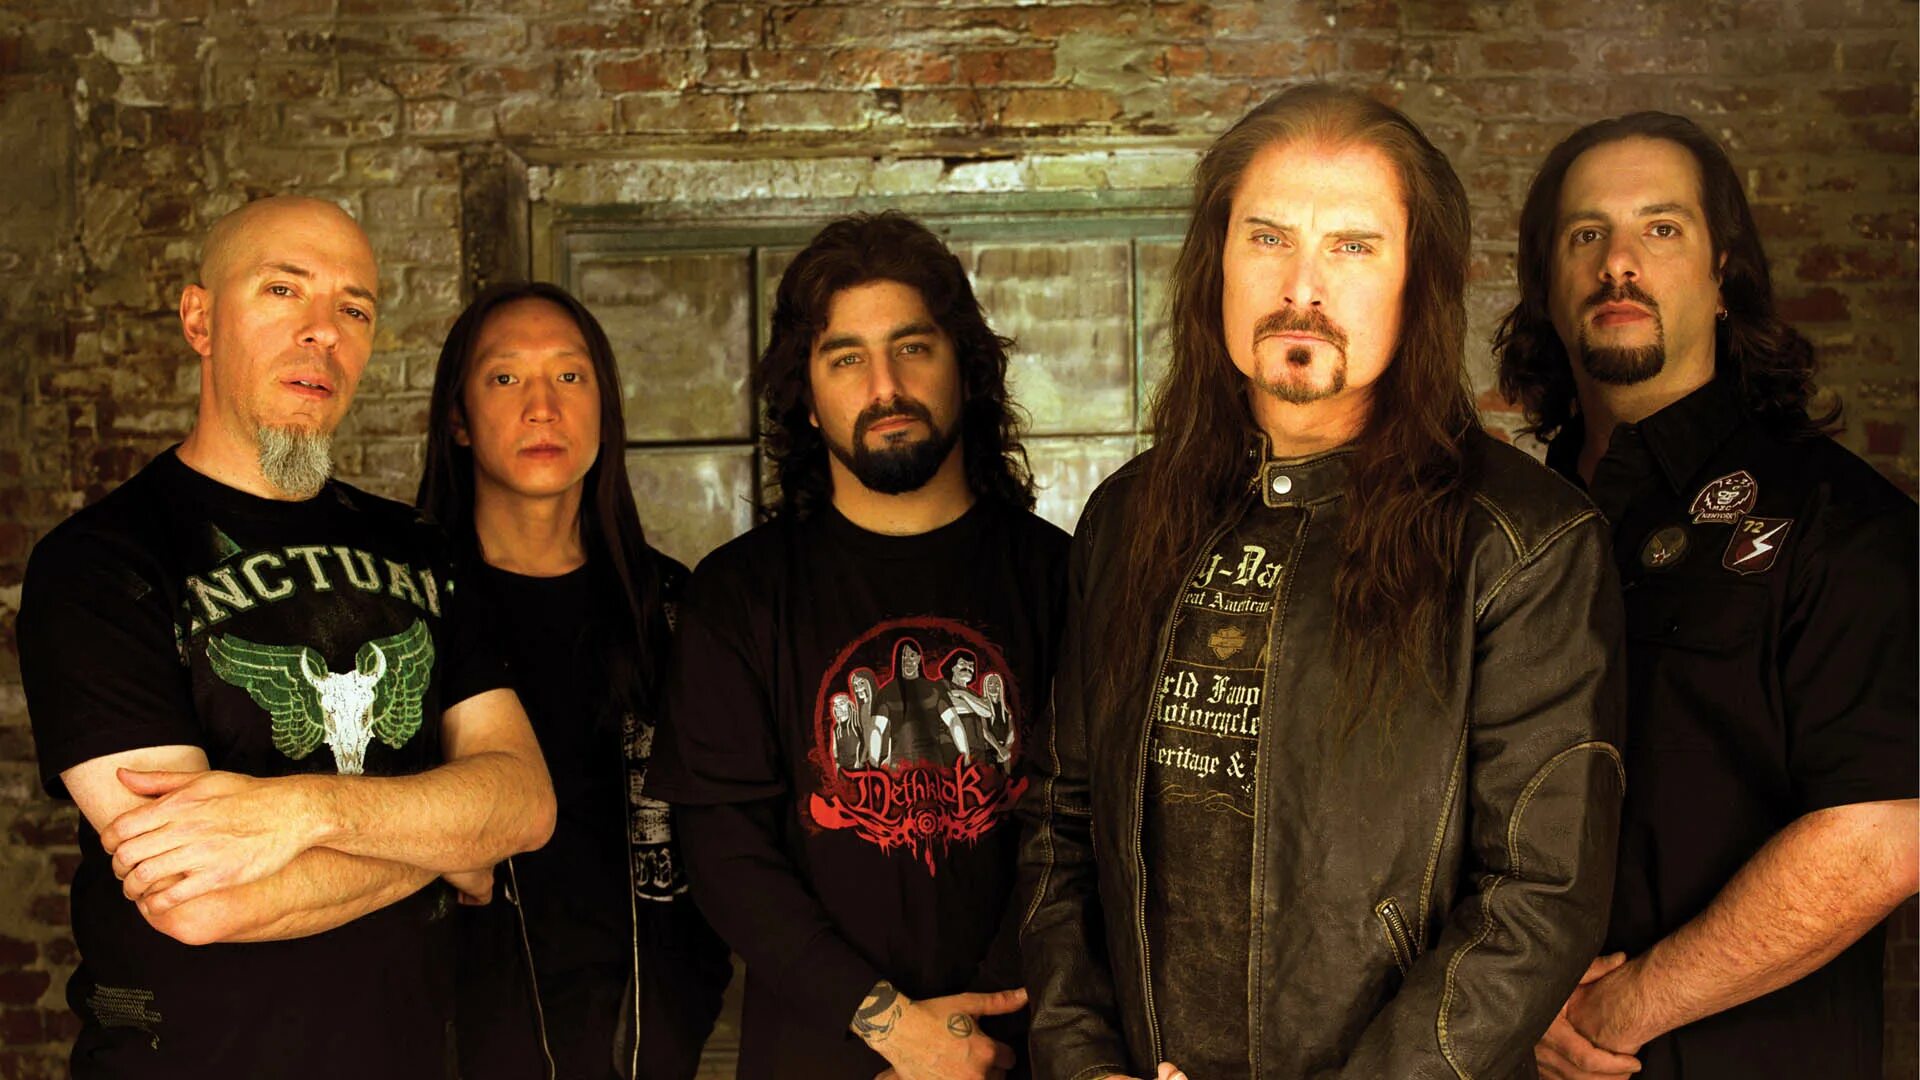 Группа Dream Theater. Dream Theater фото группы. Группа Dream Theater 2007. Dream Theater 2021. Dream theater альбомы